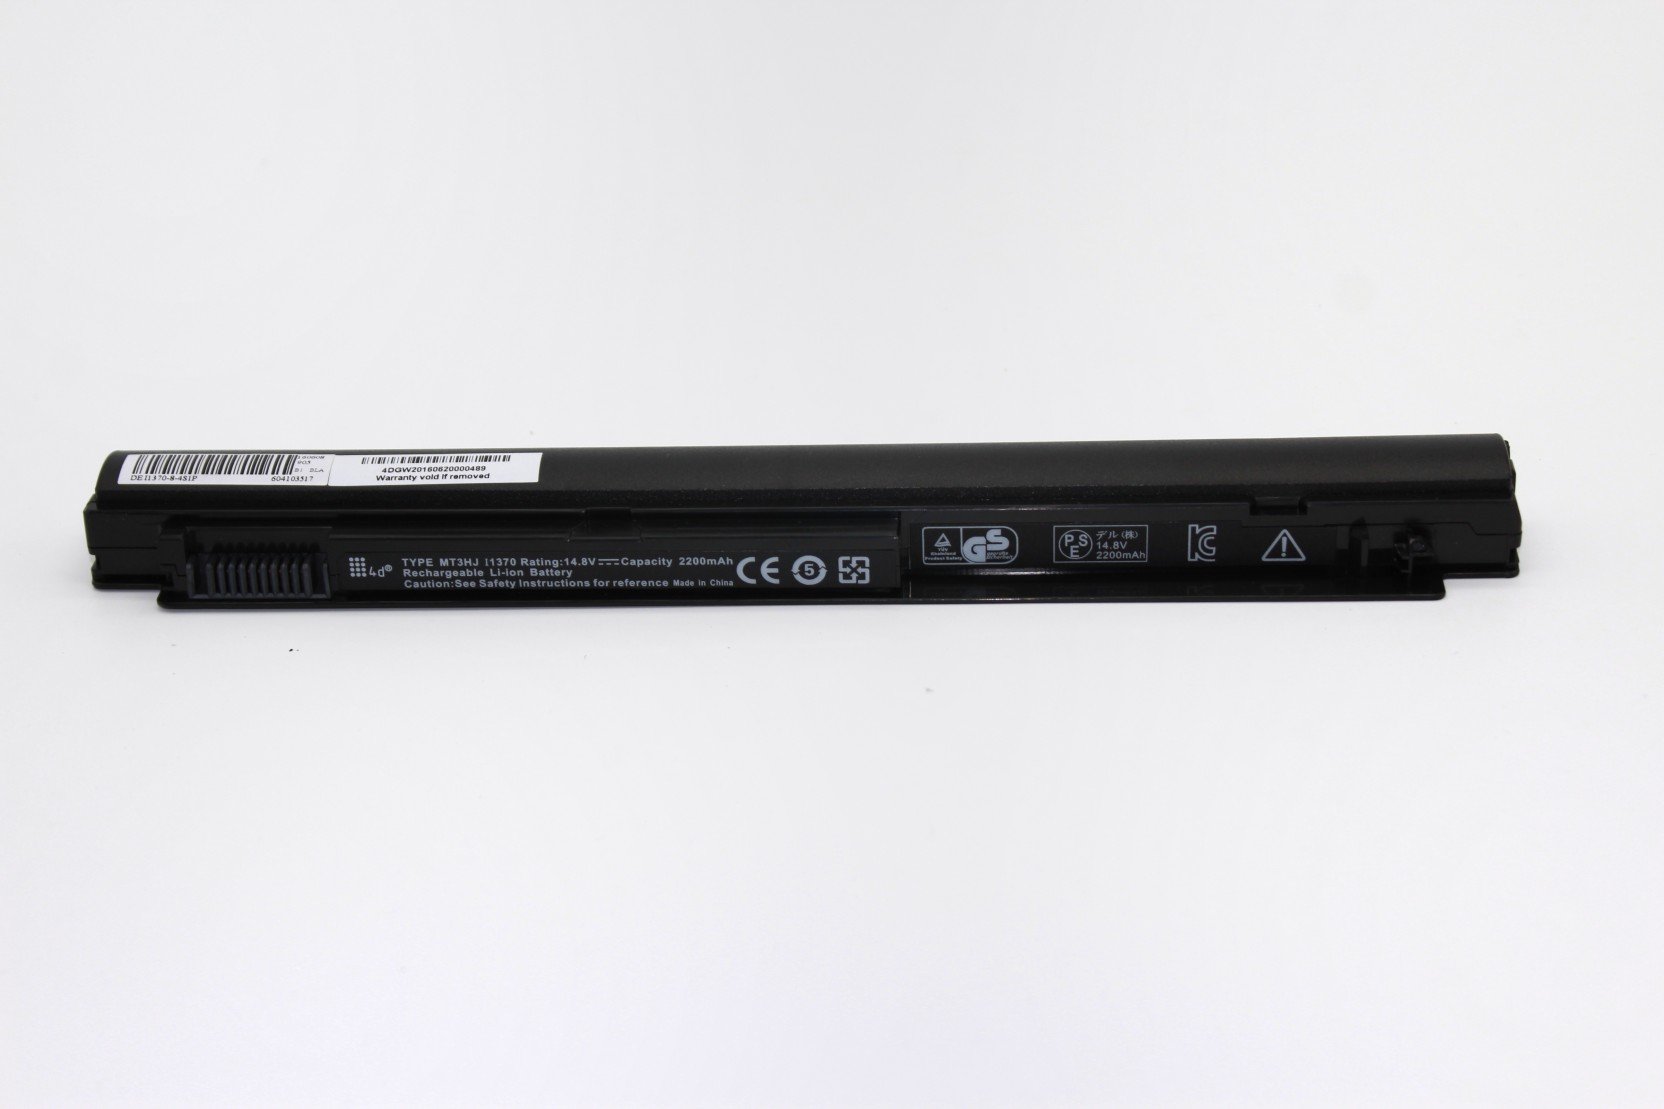 Dell Inspiron 13z(P06S) Laptop Battery - eBuy UAE